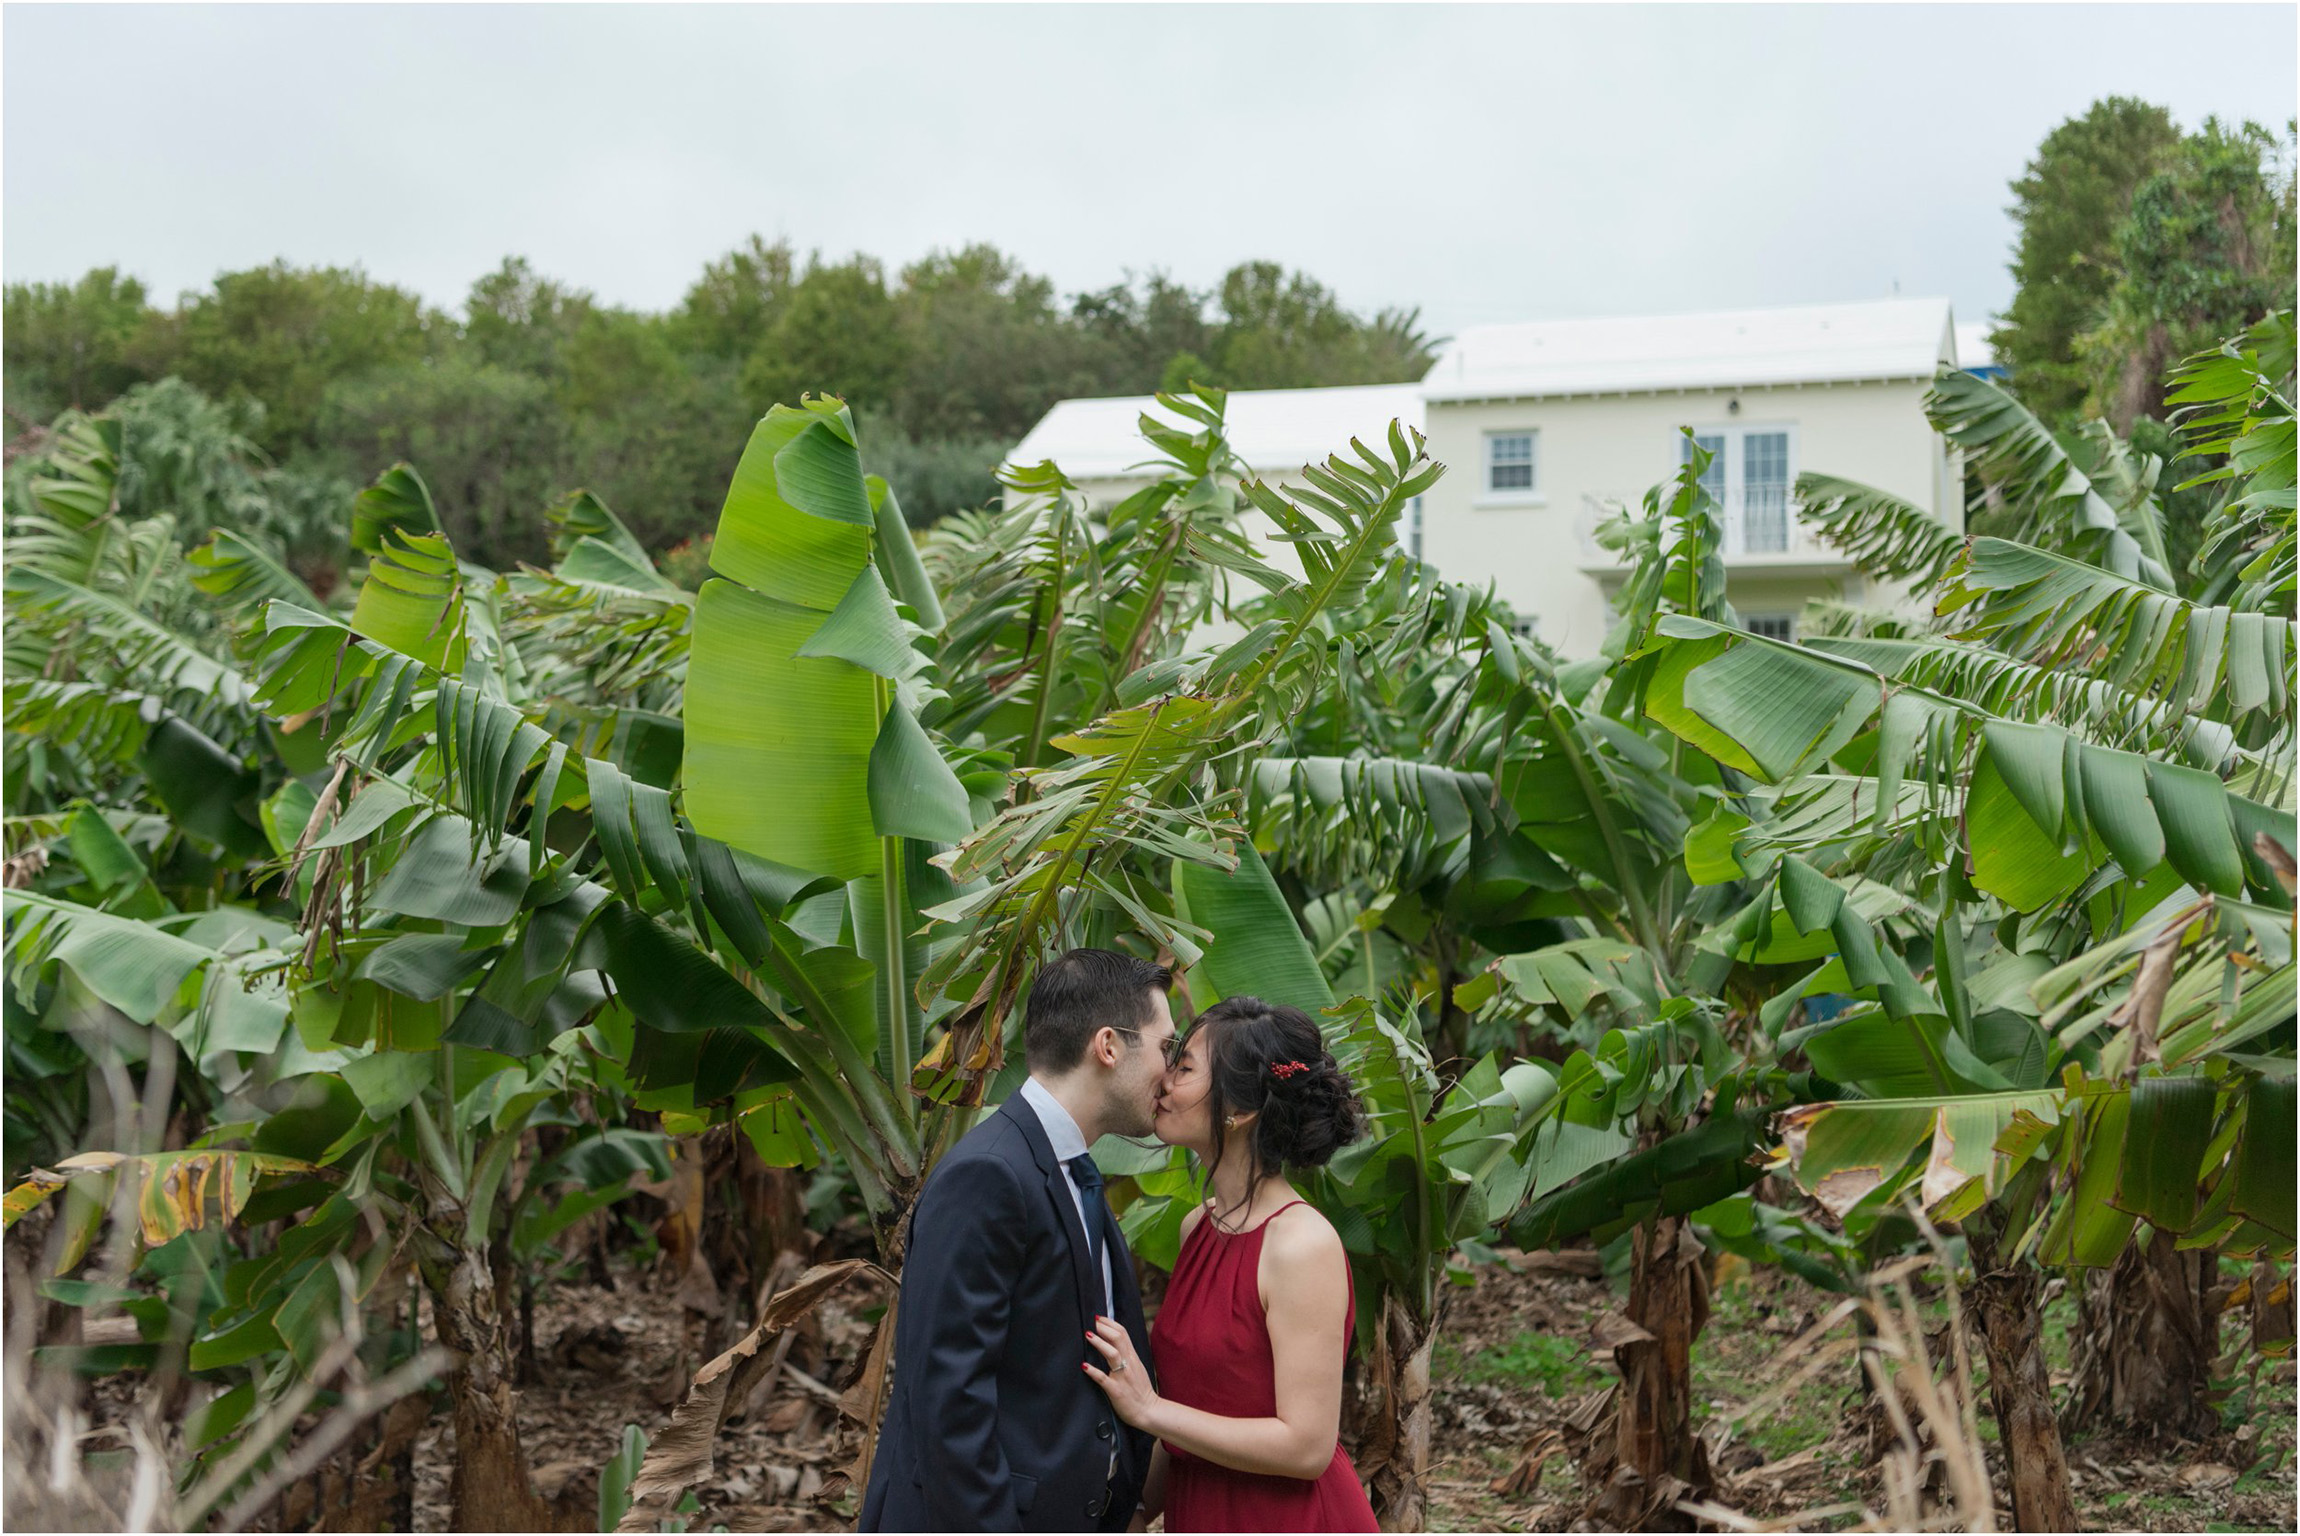 ©FianderFoto_Destination Wedding Photographer_Bermuda_Abbots Cliff_Gibbit Island_Allyn_Zi Ran_014.jpg